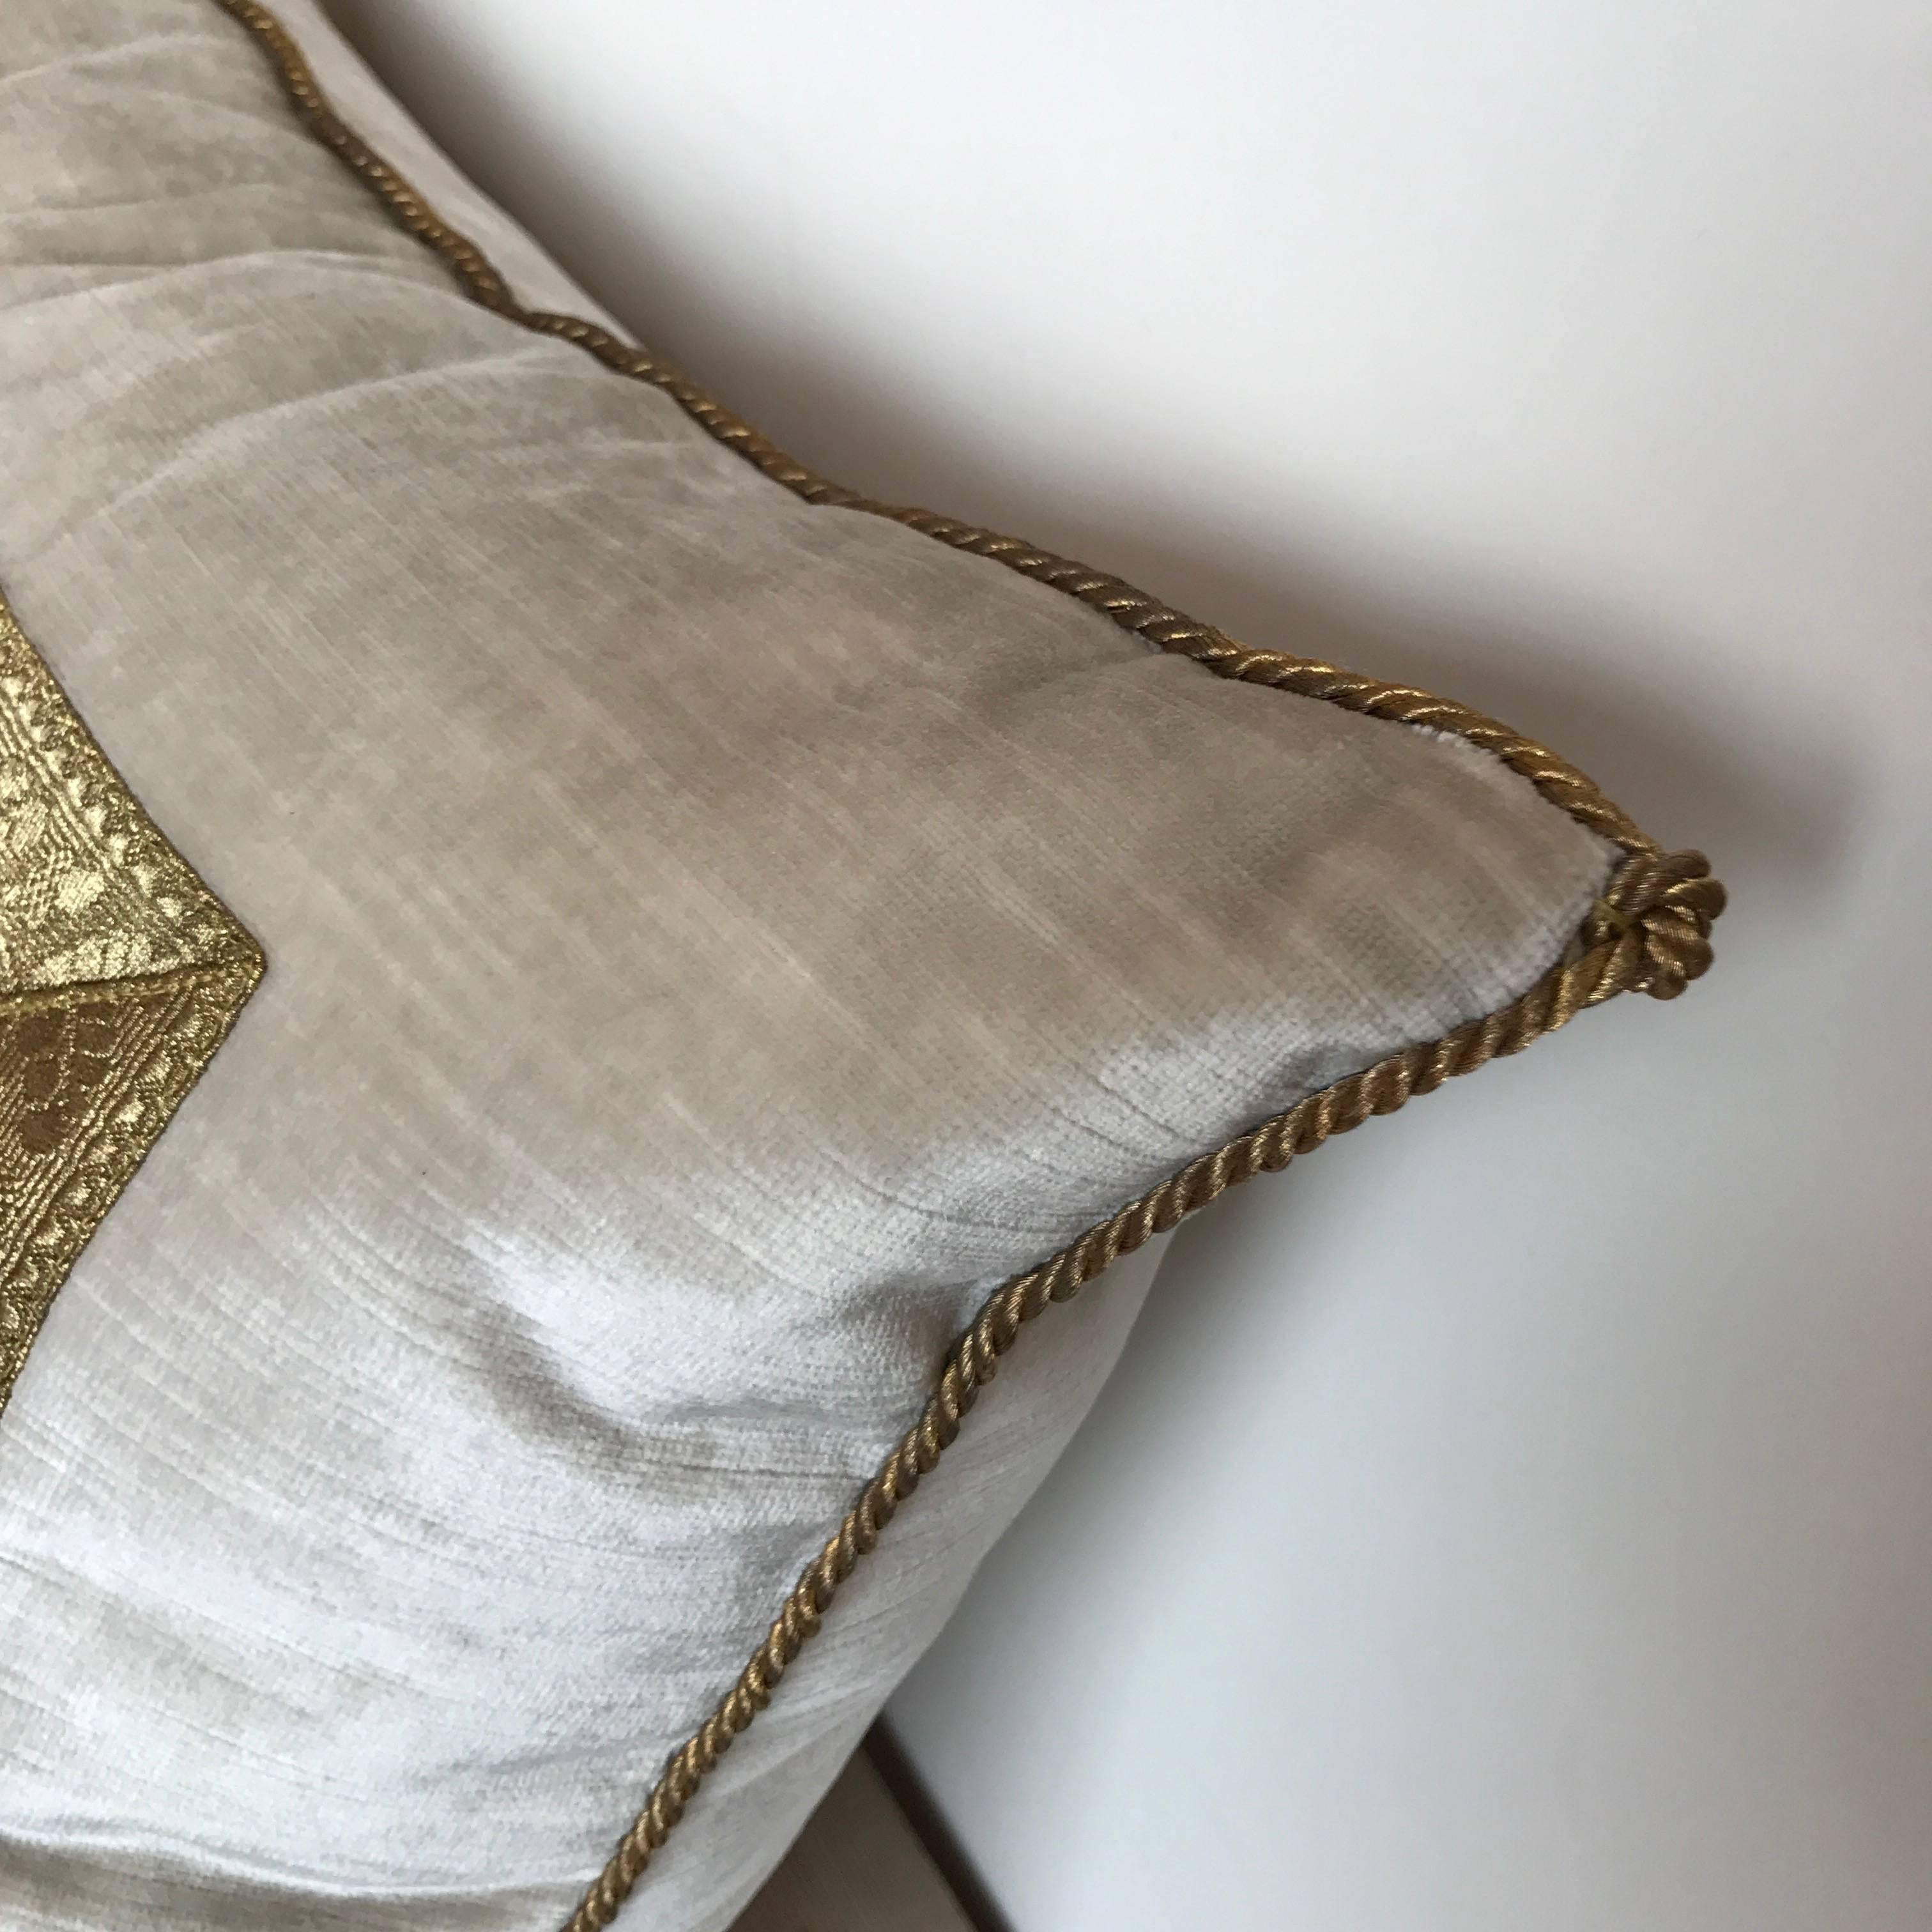 Antique Ottoman Empire Pillow In Excellent Condition For Sale In Boston, MA